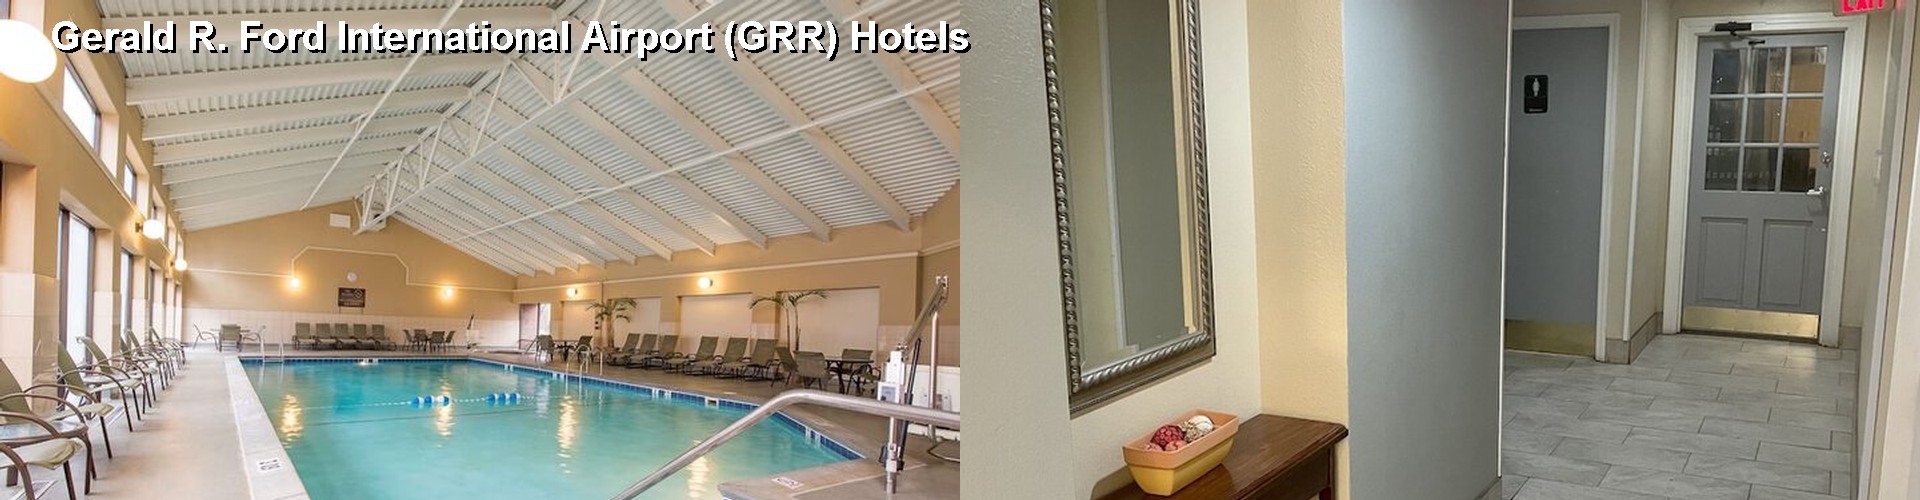 1 Best Hotels near Gerald R. Ford International Airport (GRR)